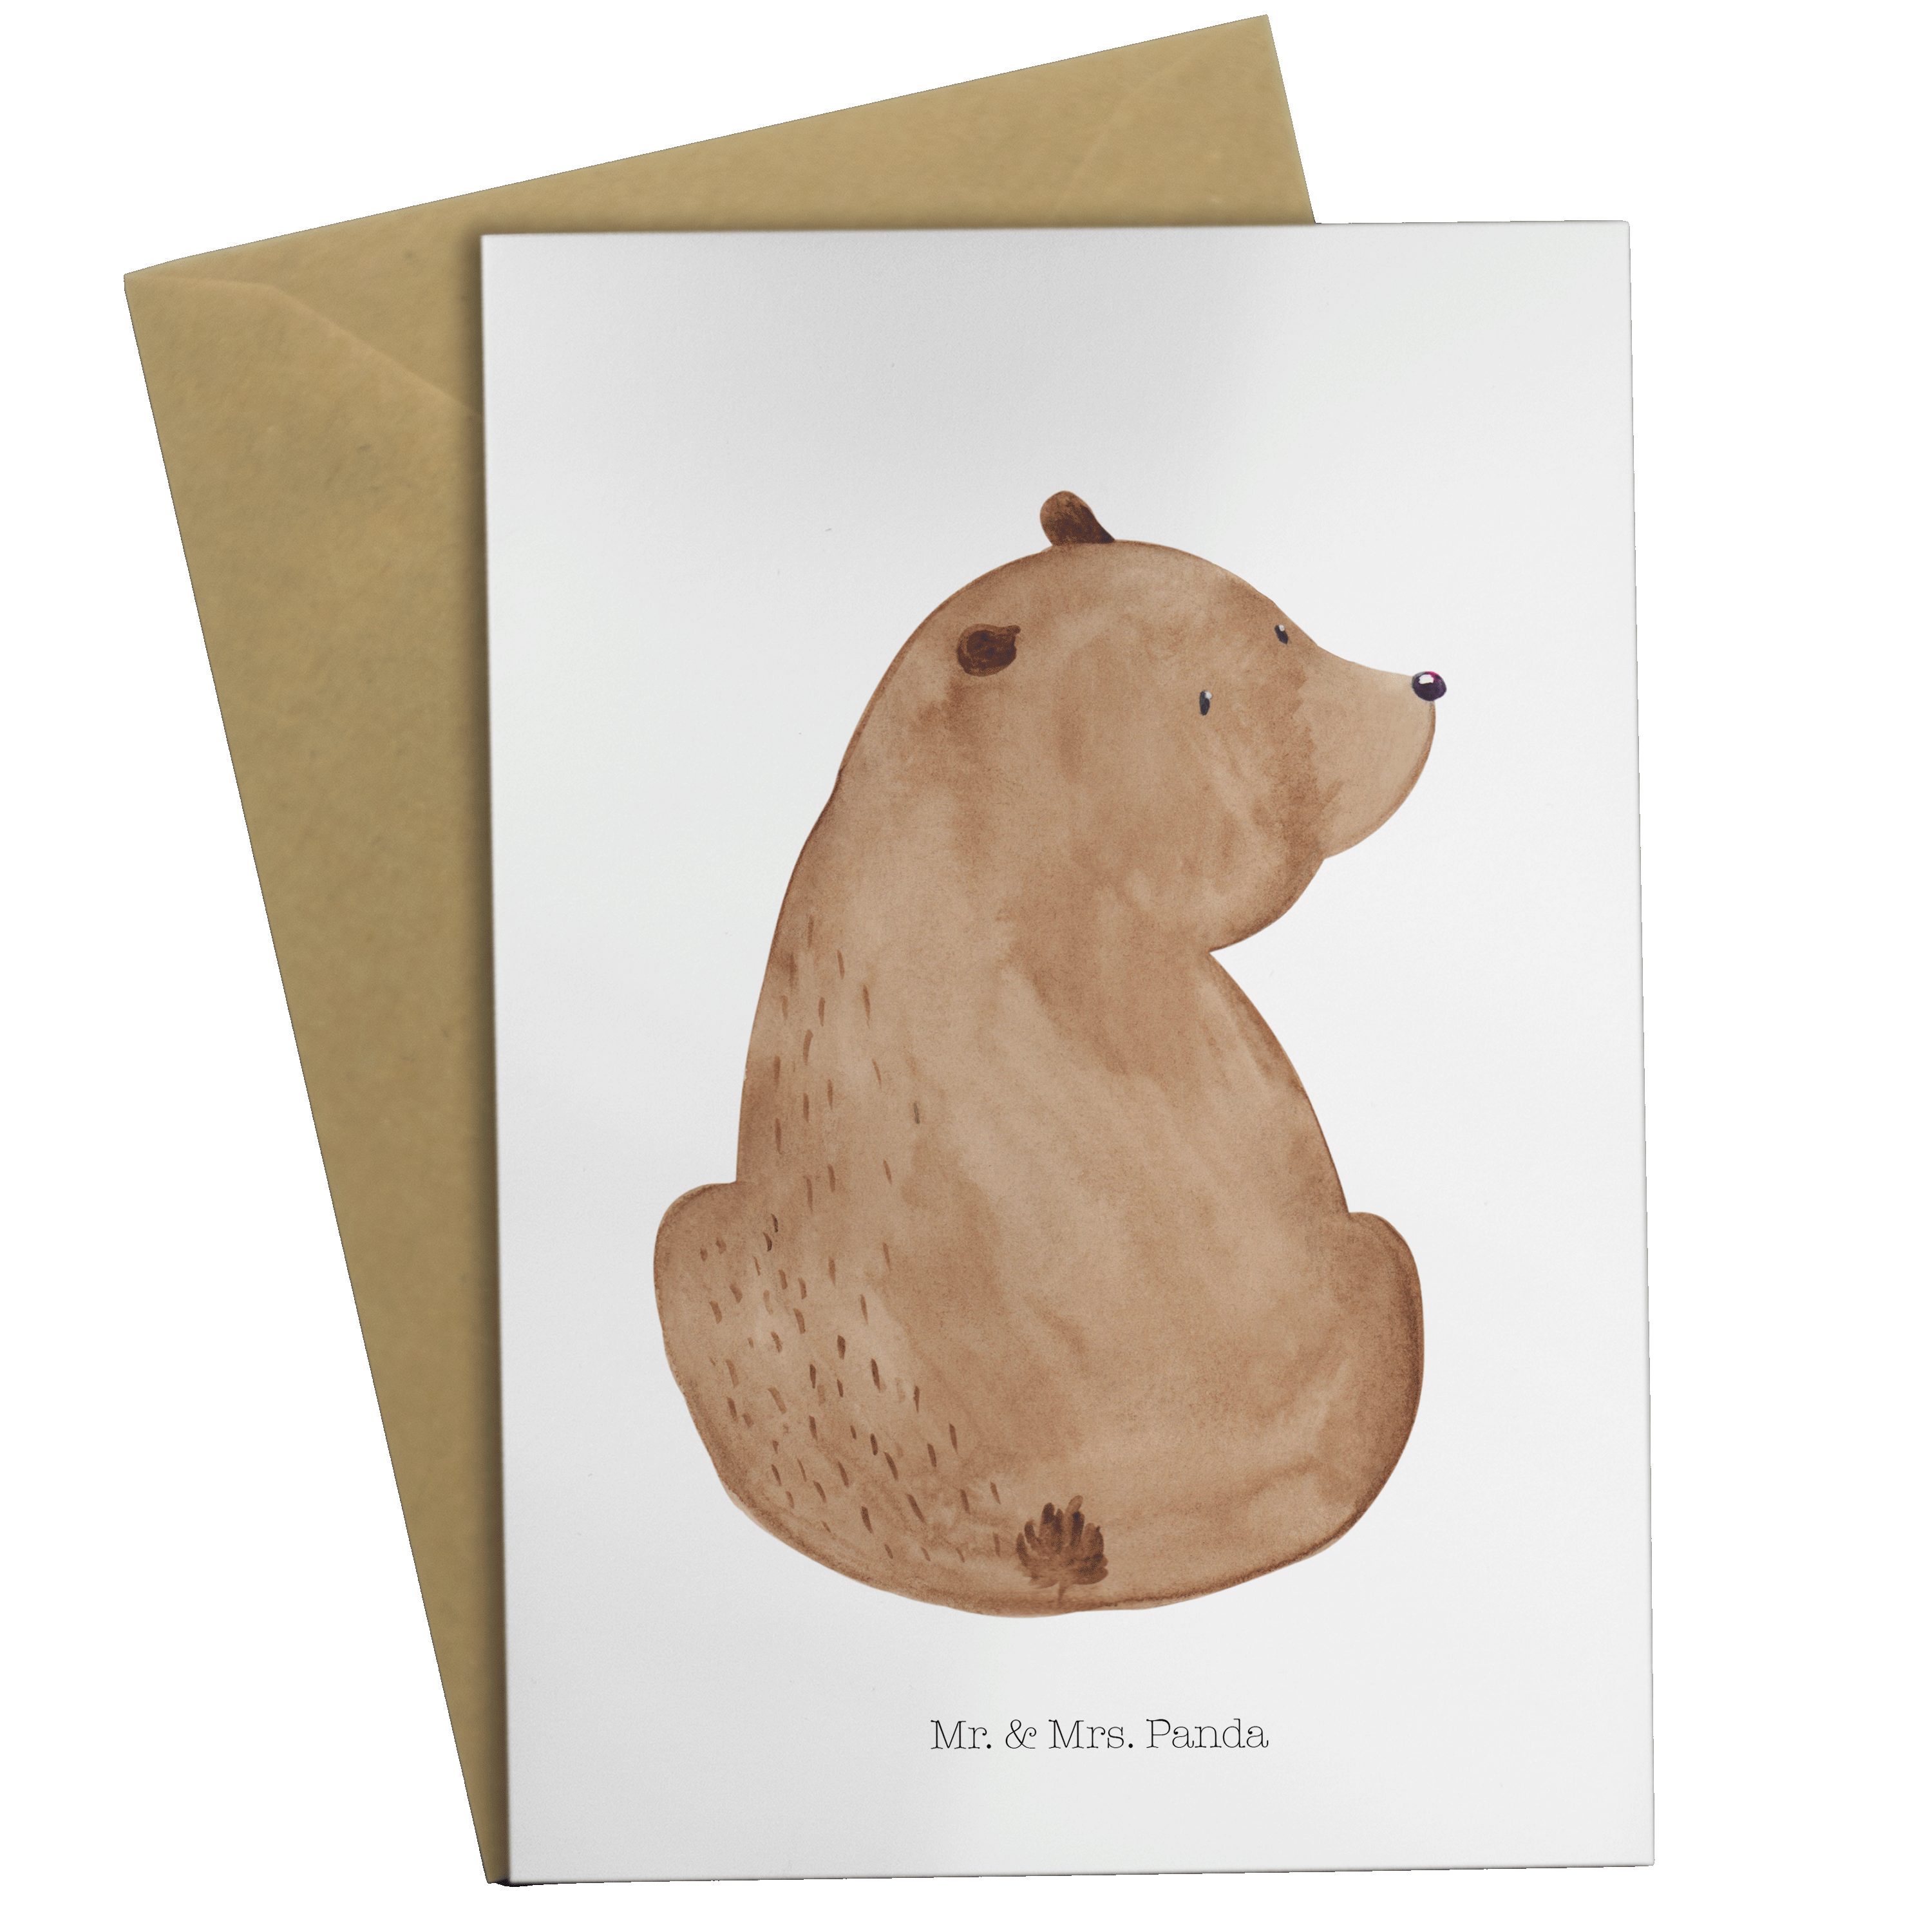 Mr. & Mrs. Panda Schulterblick - Einladungskarte, Teddybär Grußkarte - Bär Geschenk, Weiß Teddy